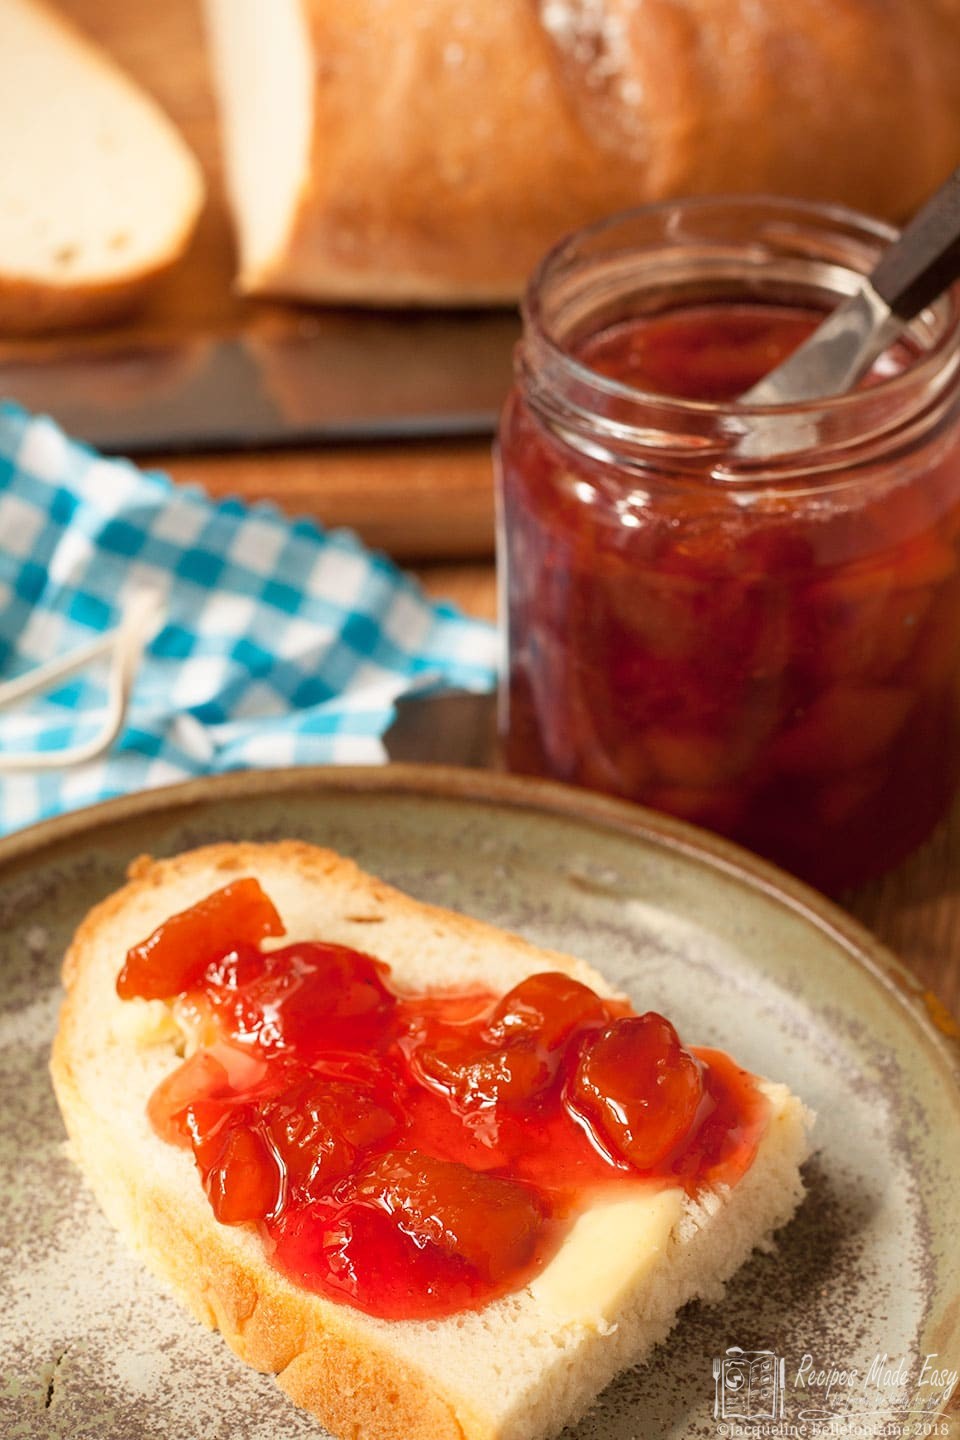 peach and Pomegranate jam spread onto bread by recipes made easy